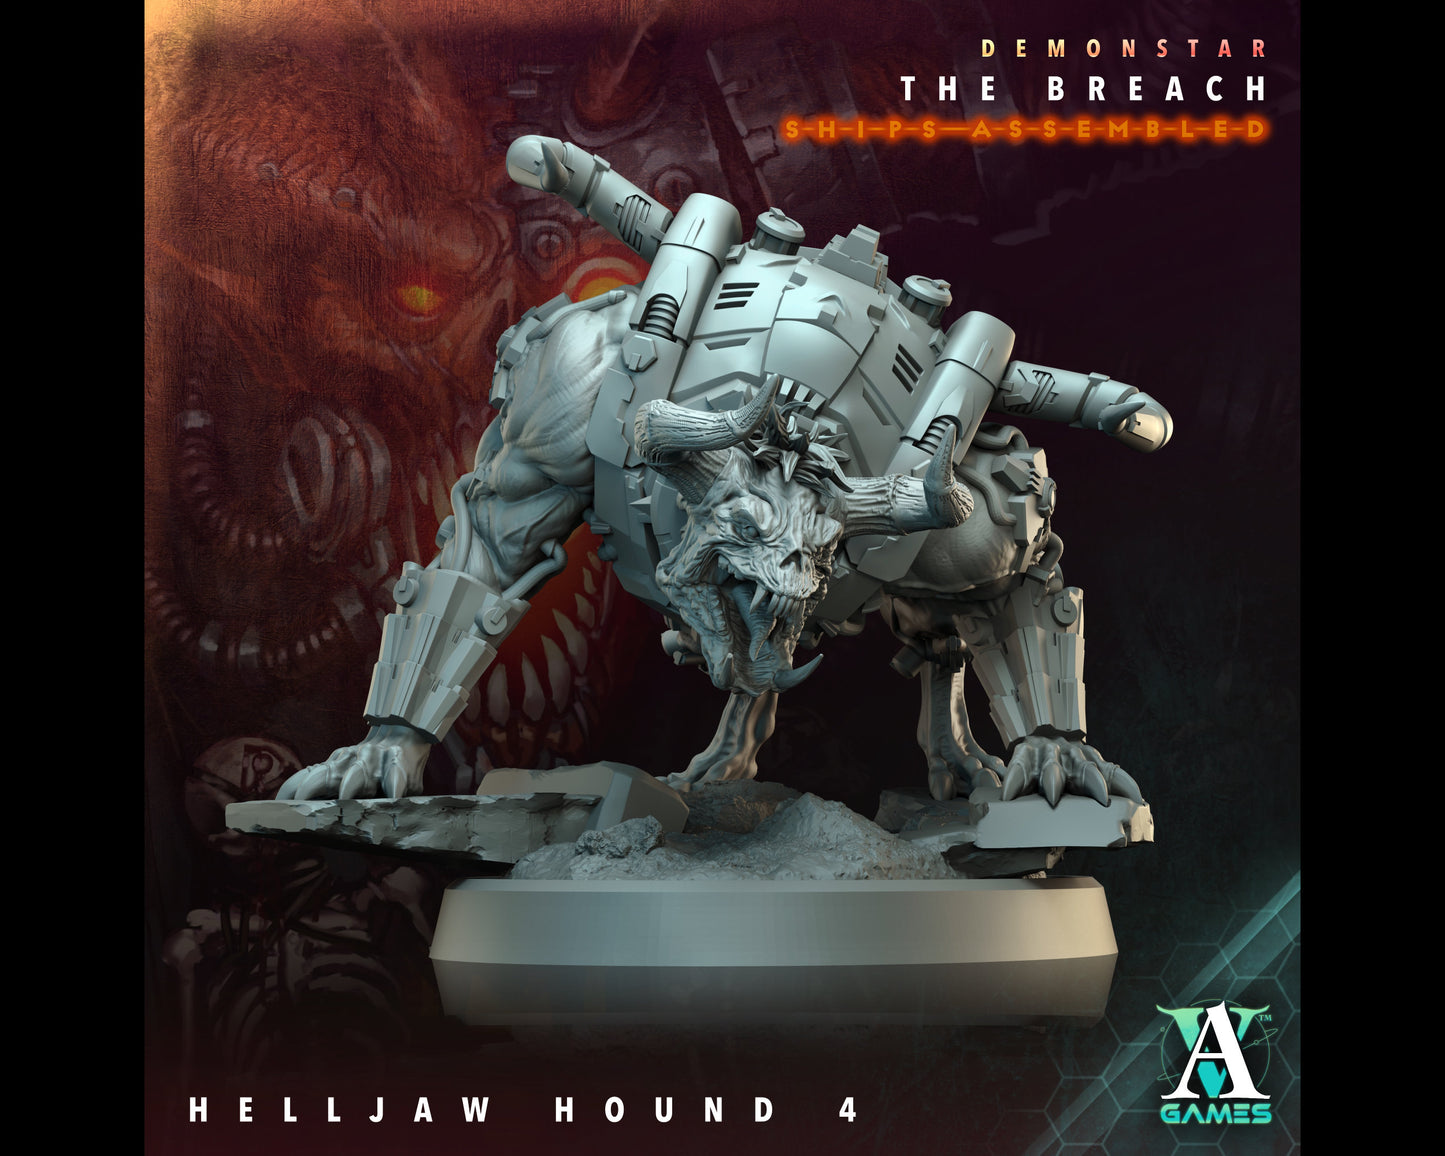 Helljaw Hound 4 - Demonstar: The Breach - Highly Detailed Resin 8k 3D Printed Miniature